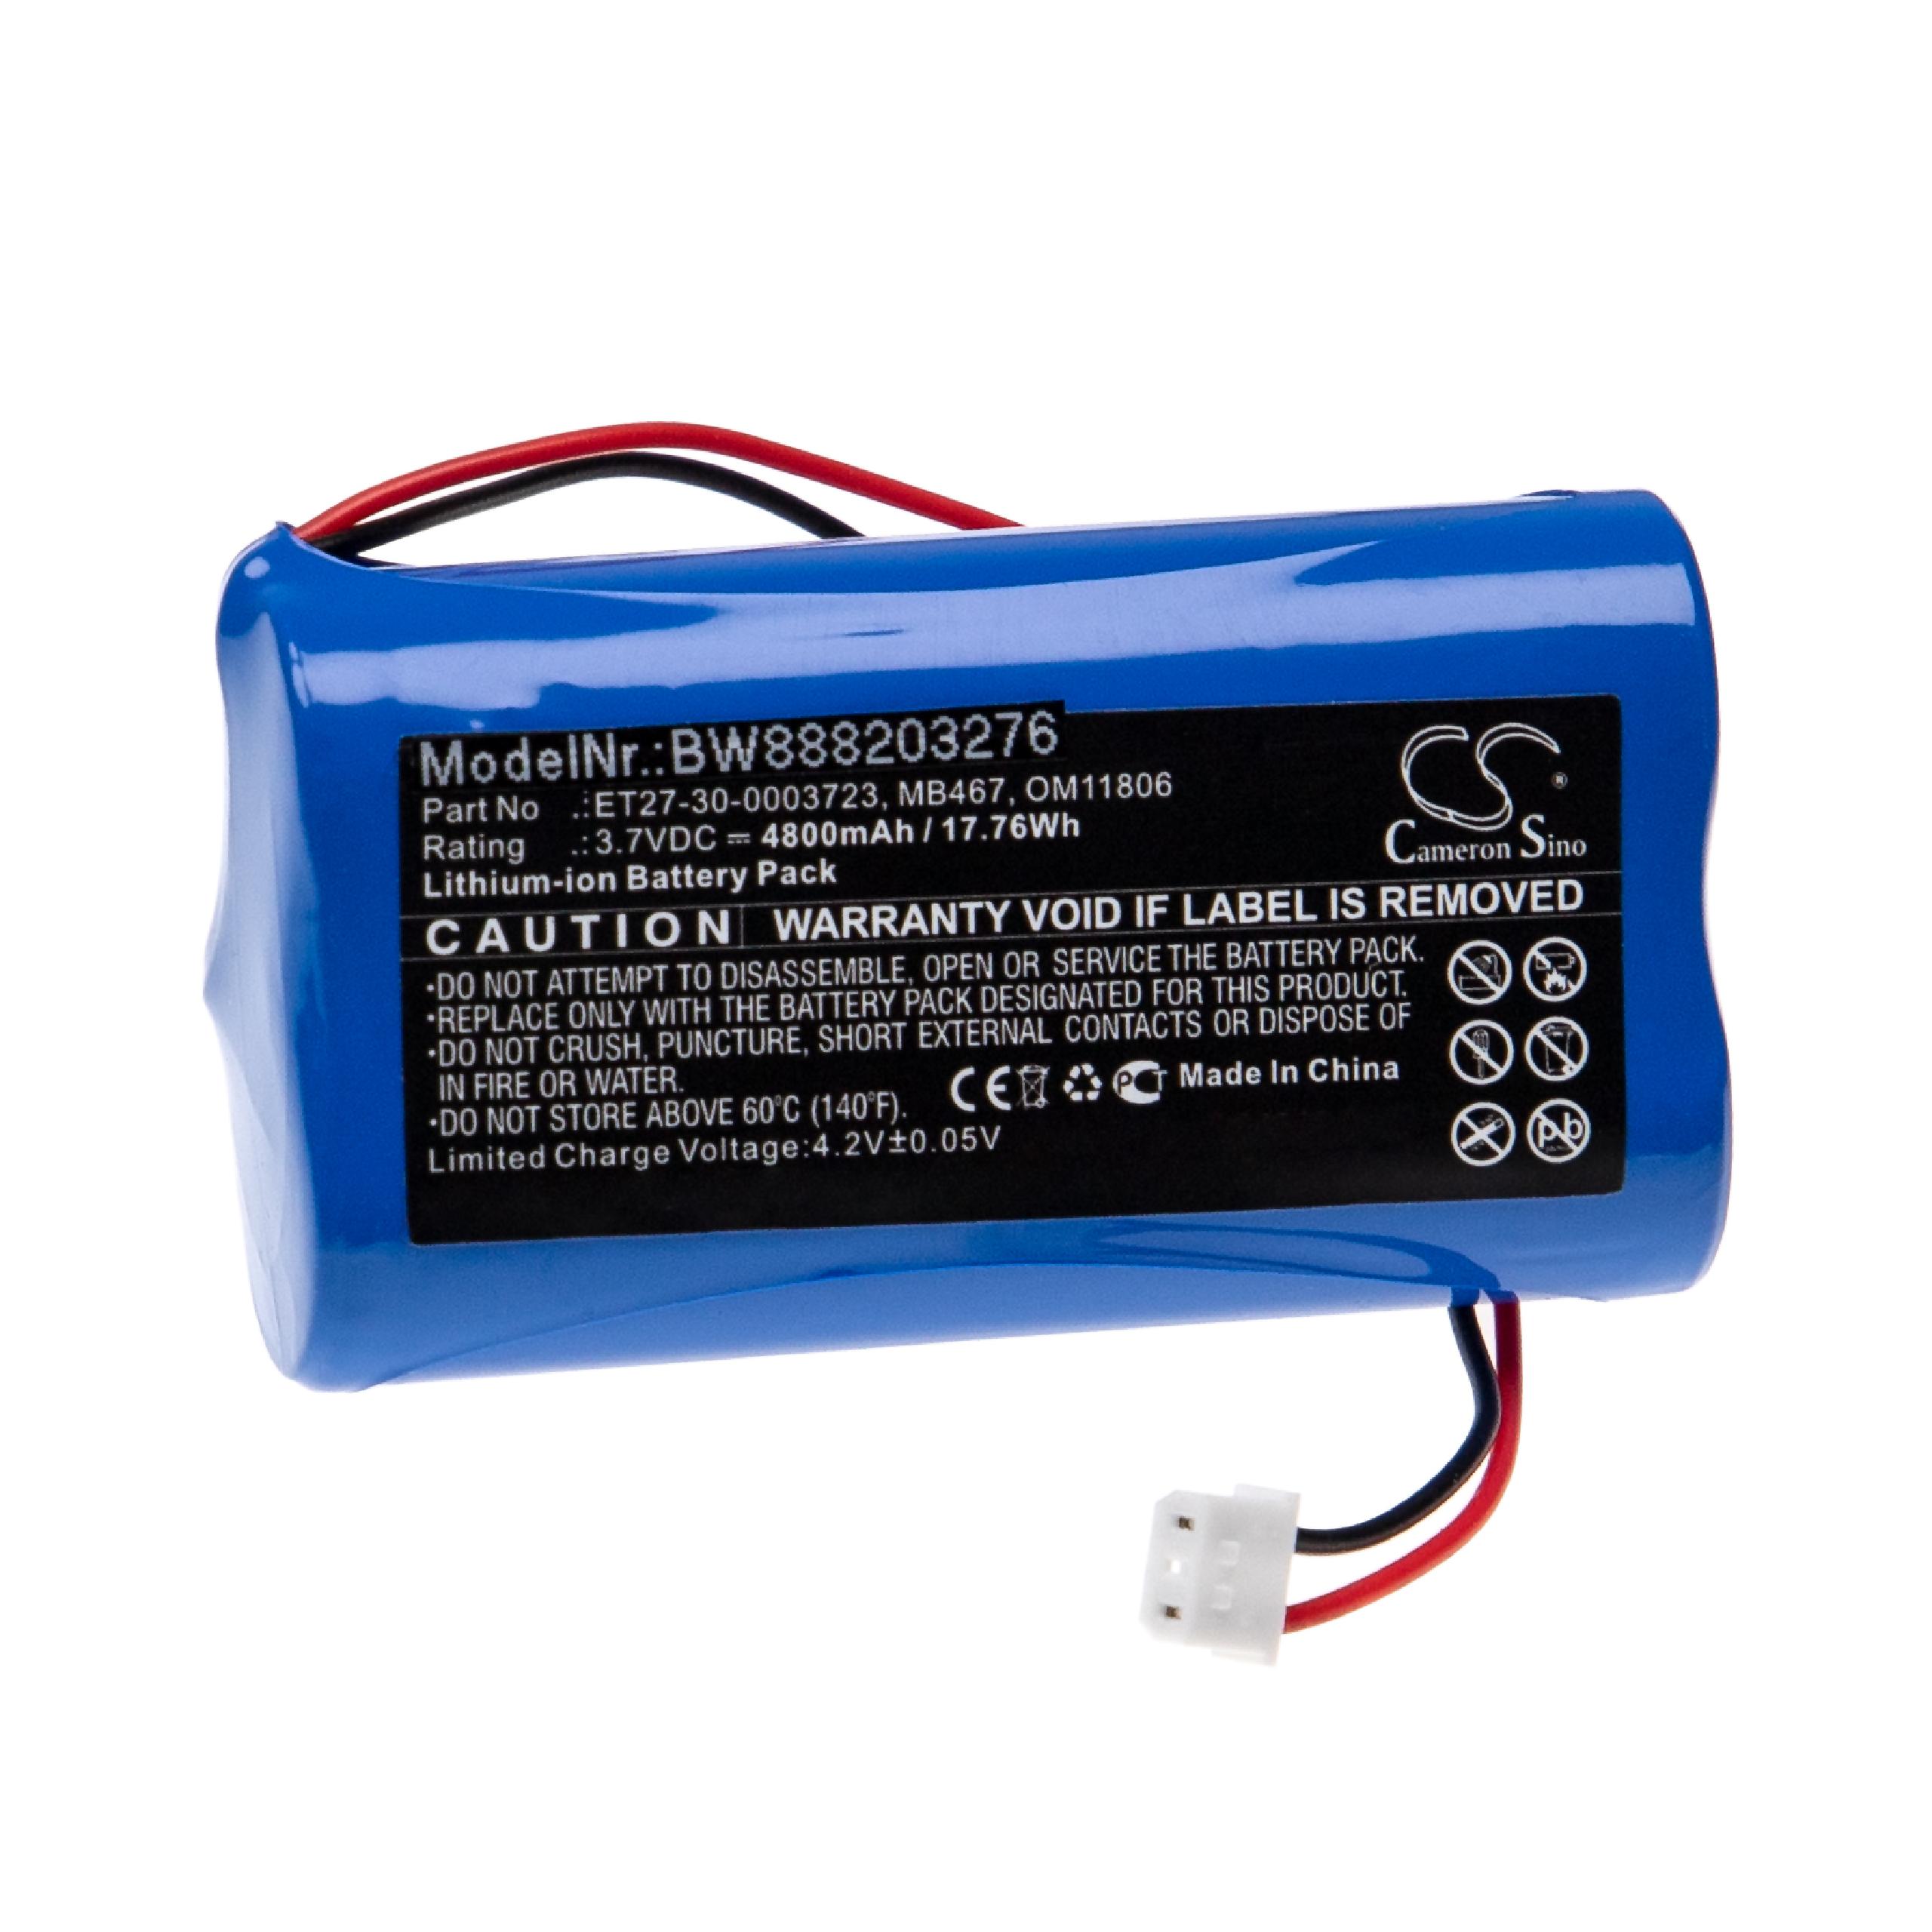 Medical Equipment Battery Replacement for Karl Storz MB467, ET27-30-0003723, 30.0003 - 4800mAh 3.7V Li-Ion